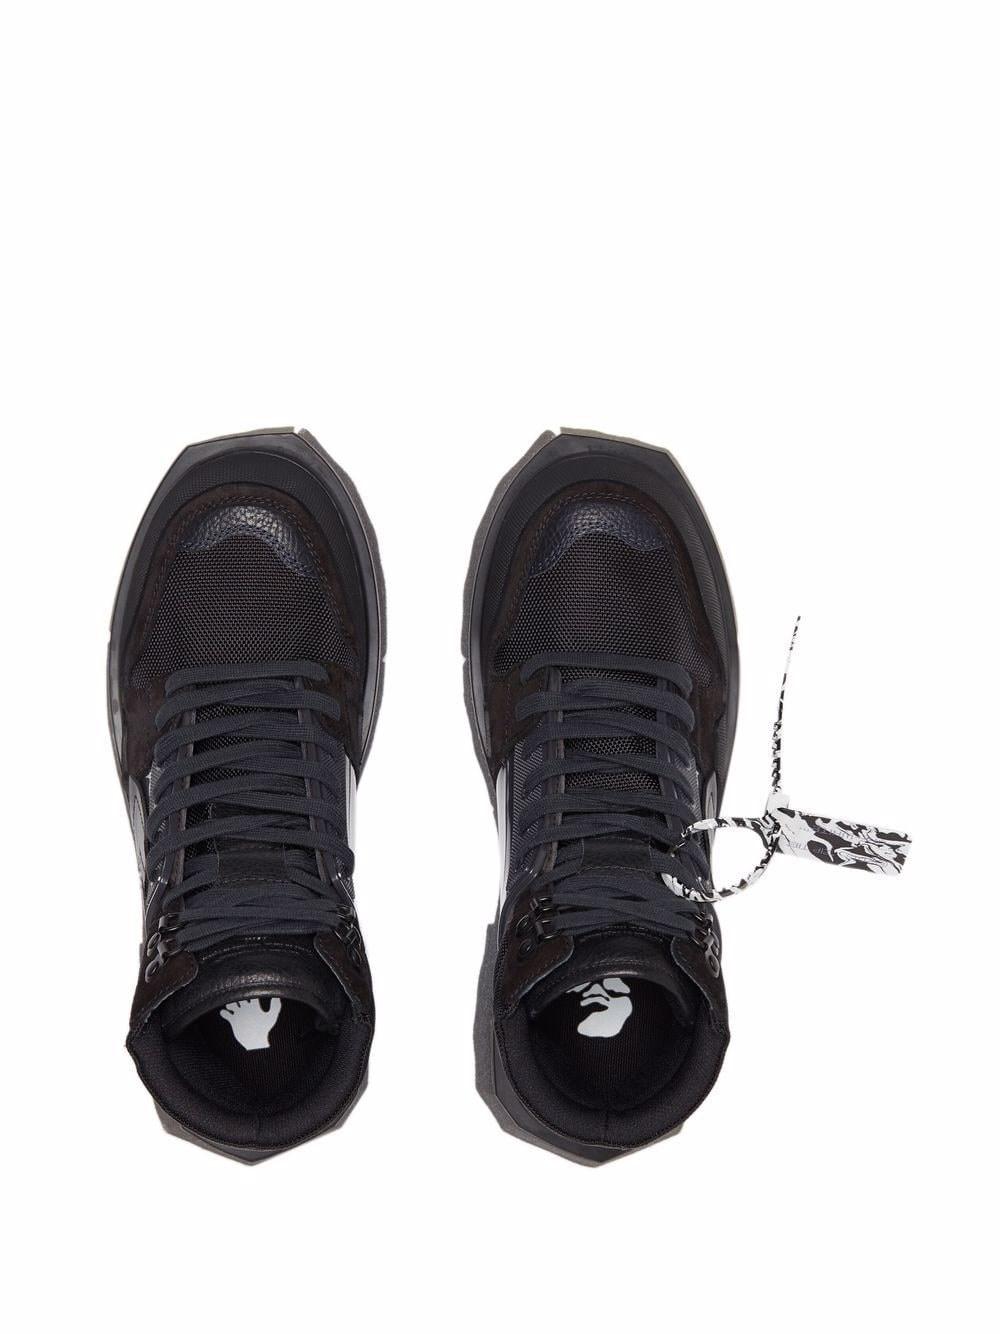 Off-White c/o Virgil Abloh Arrow Motif Hiking Sneaker Boots in